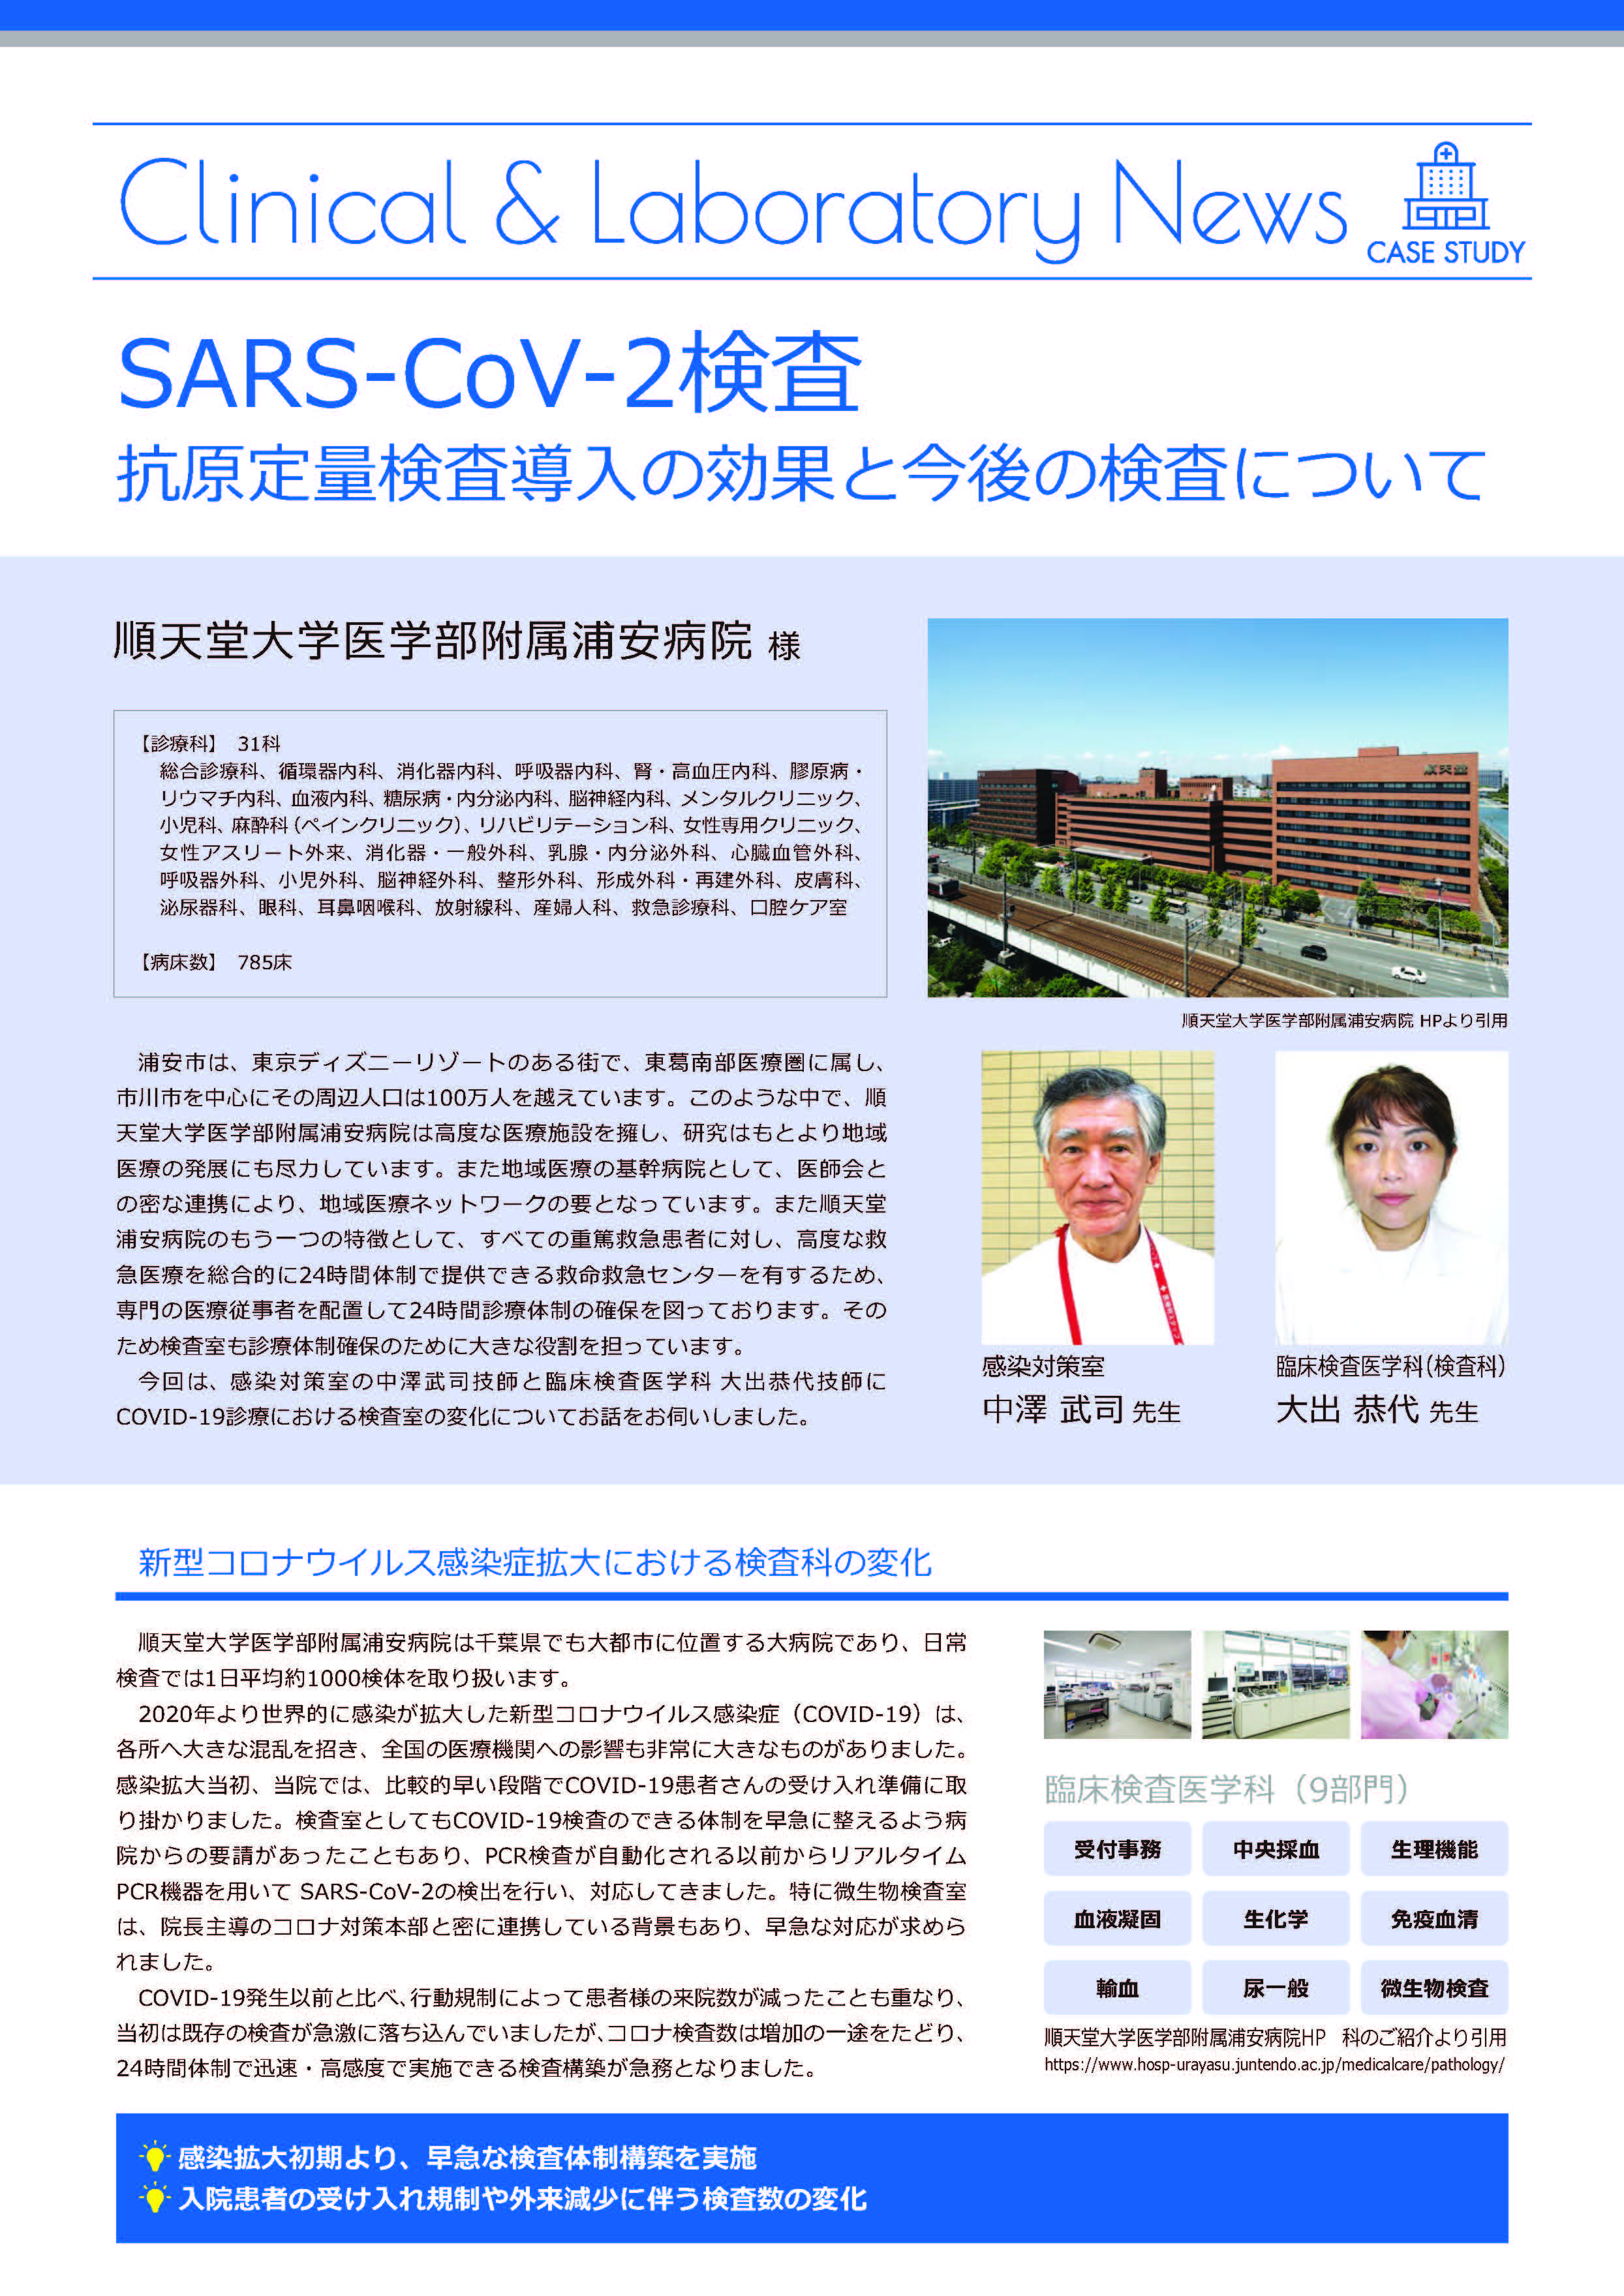 SARS-CoV-2検査 抗原定量検査導入の効果と今後の検査について